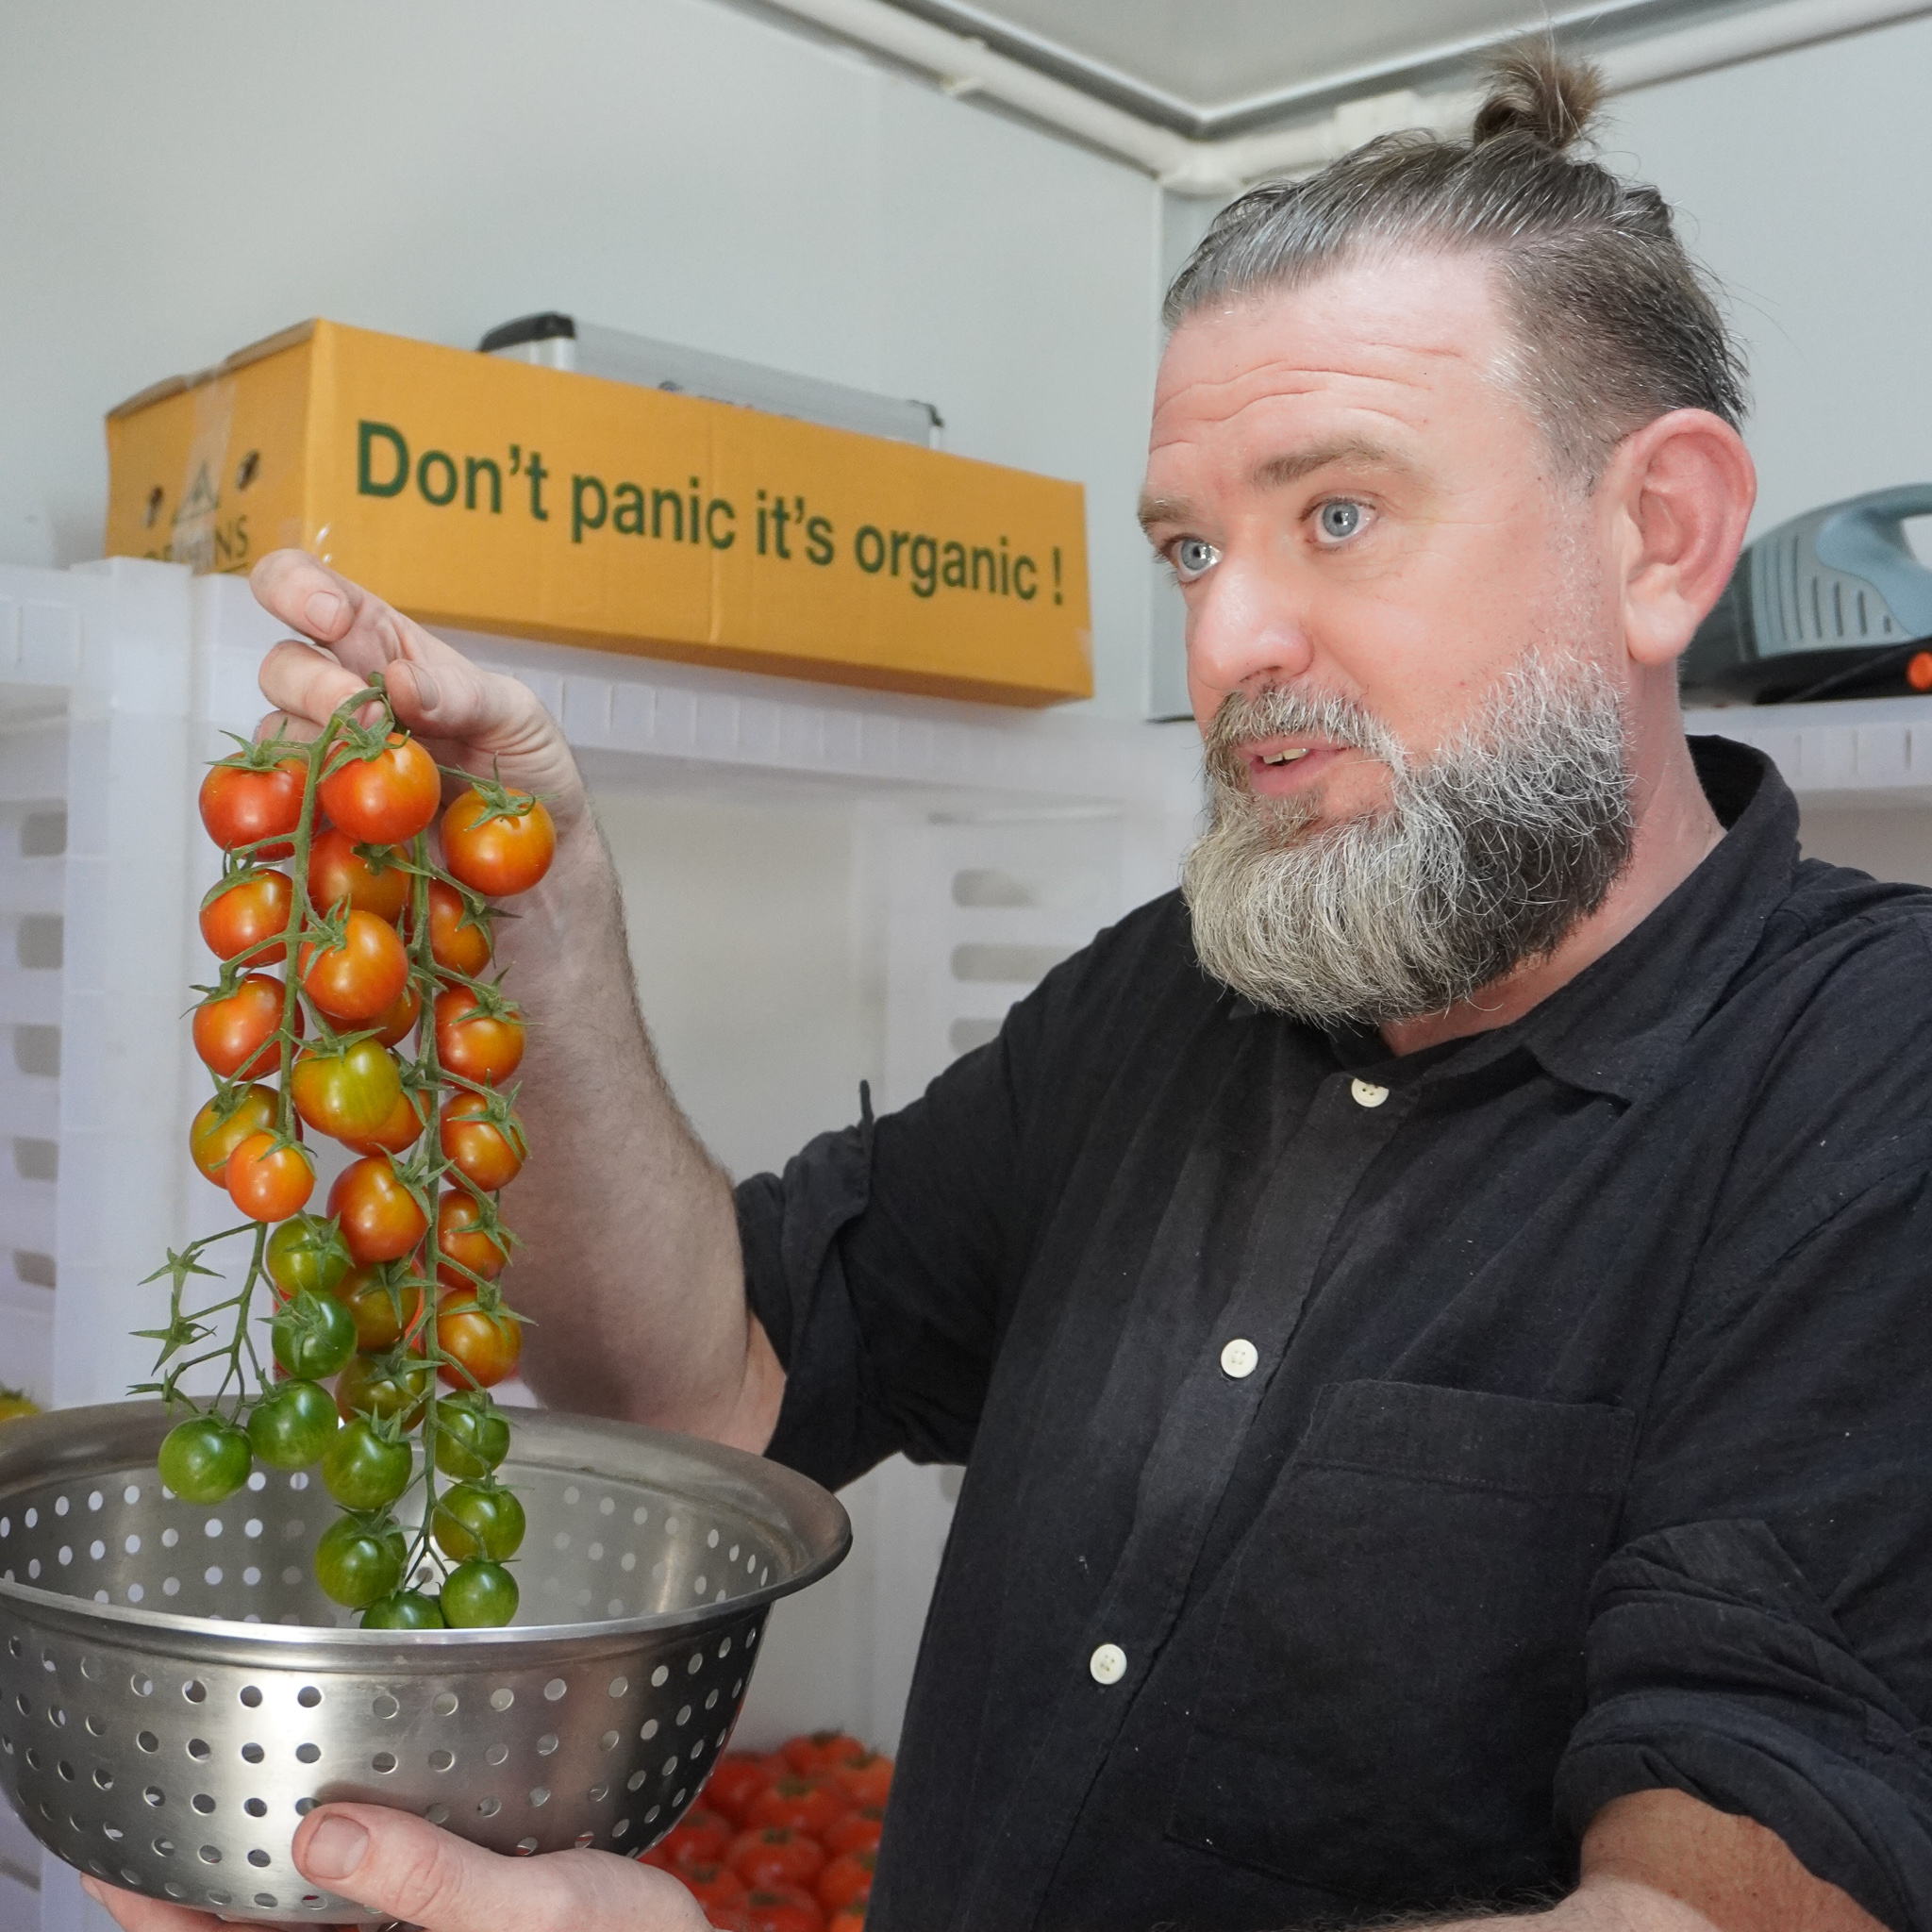 Organic mixed heirloom tomatoes